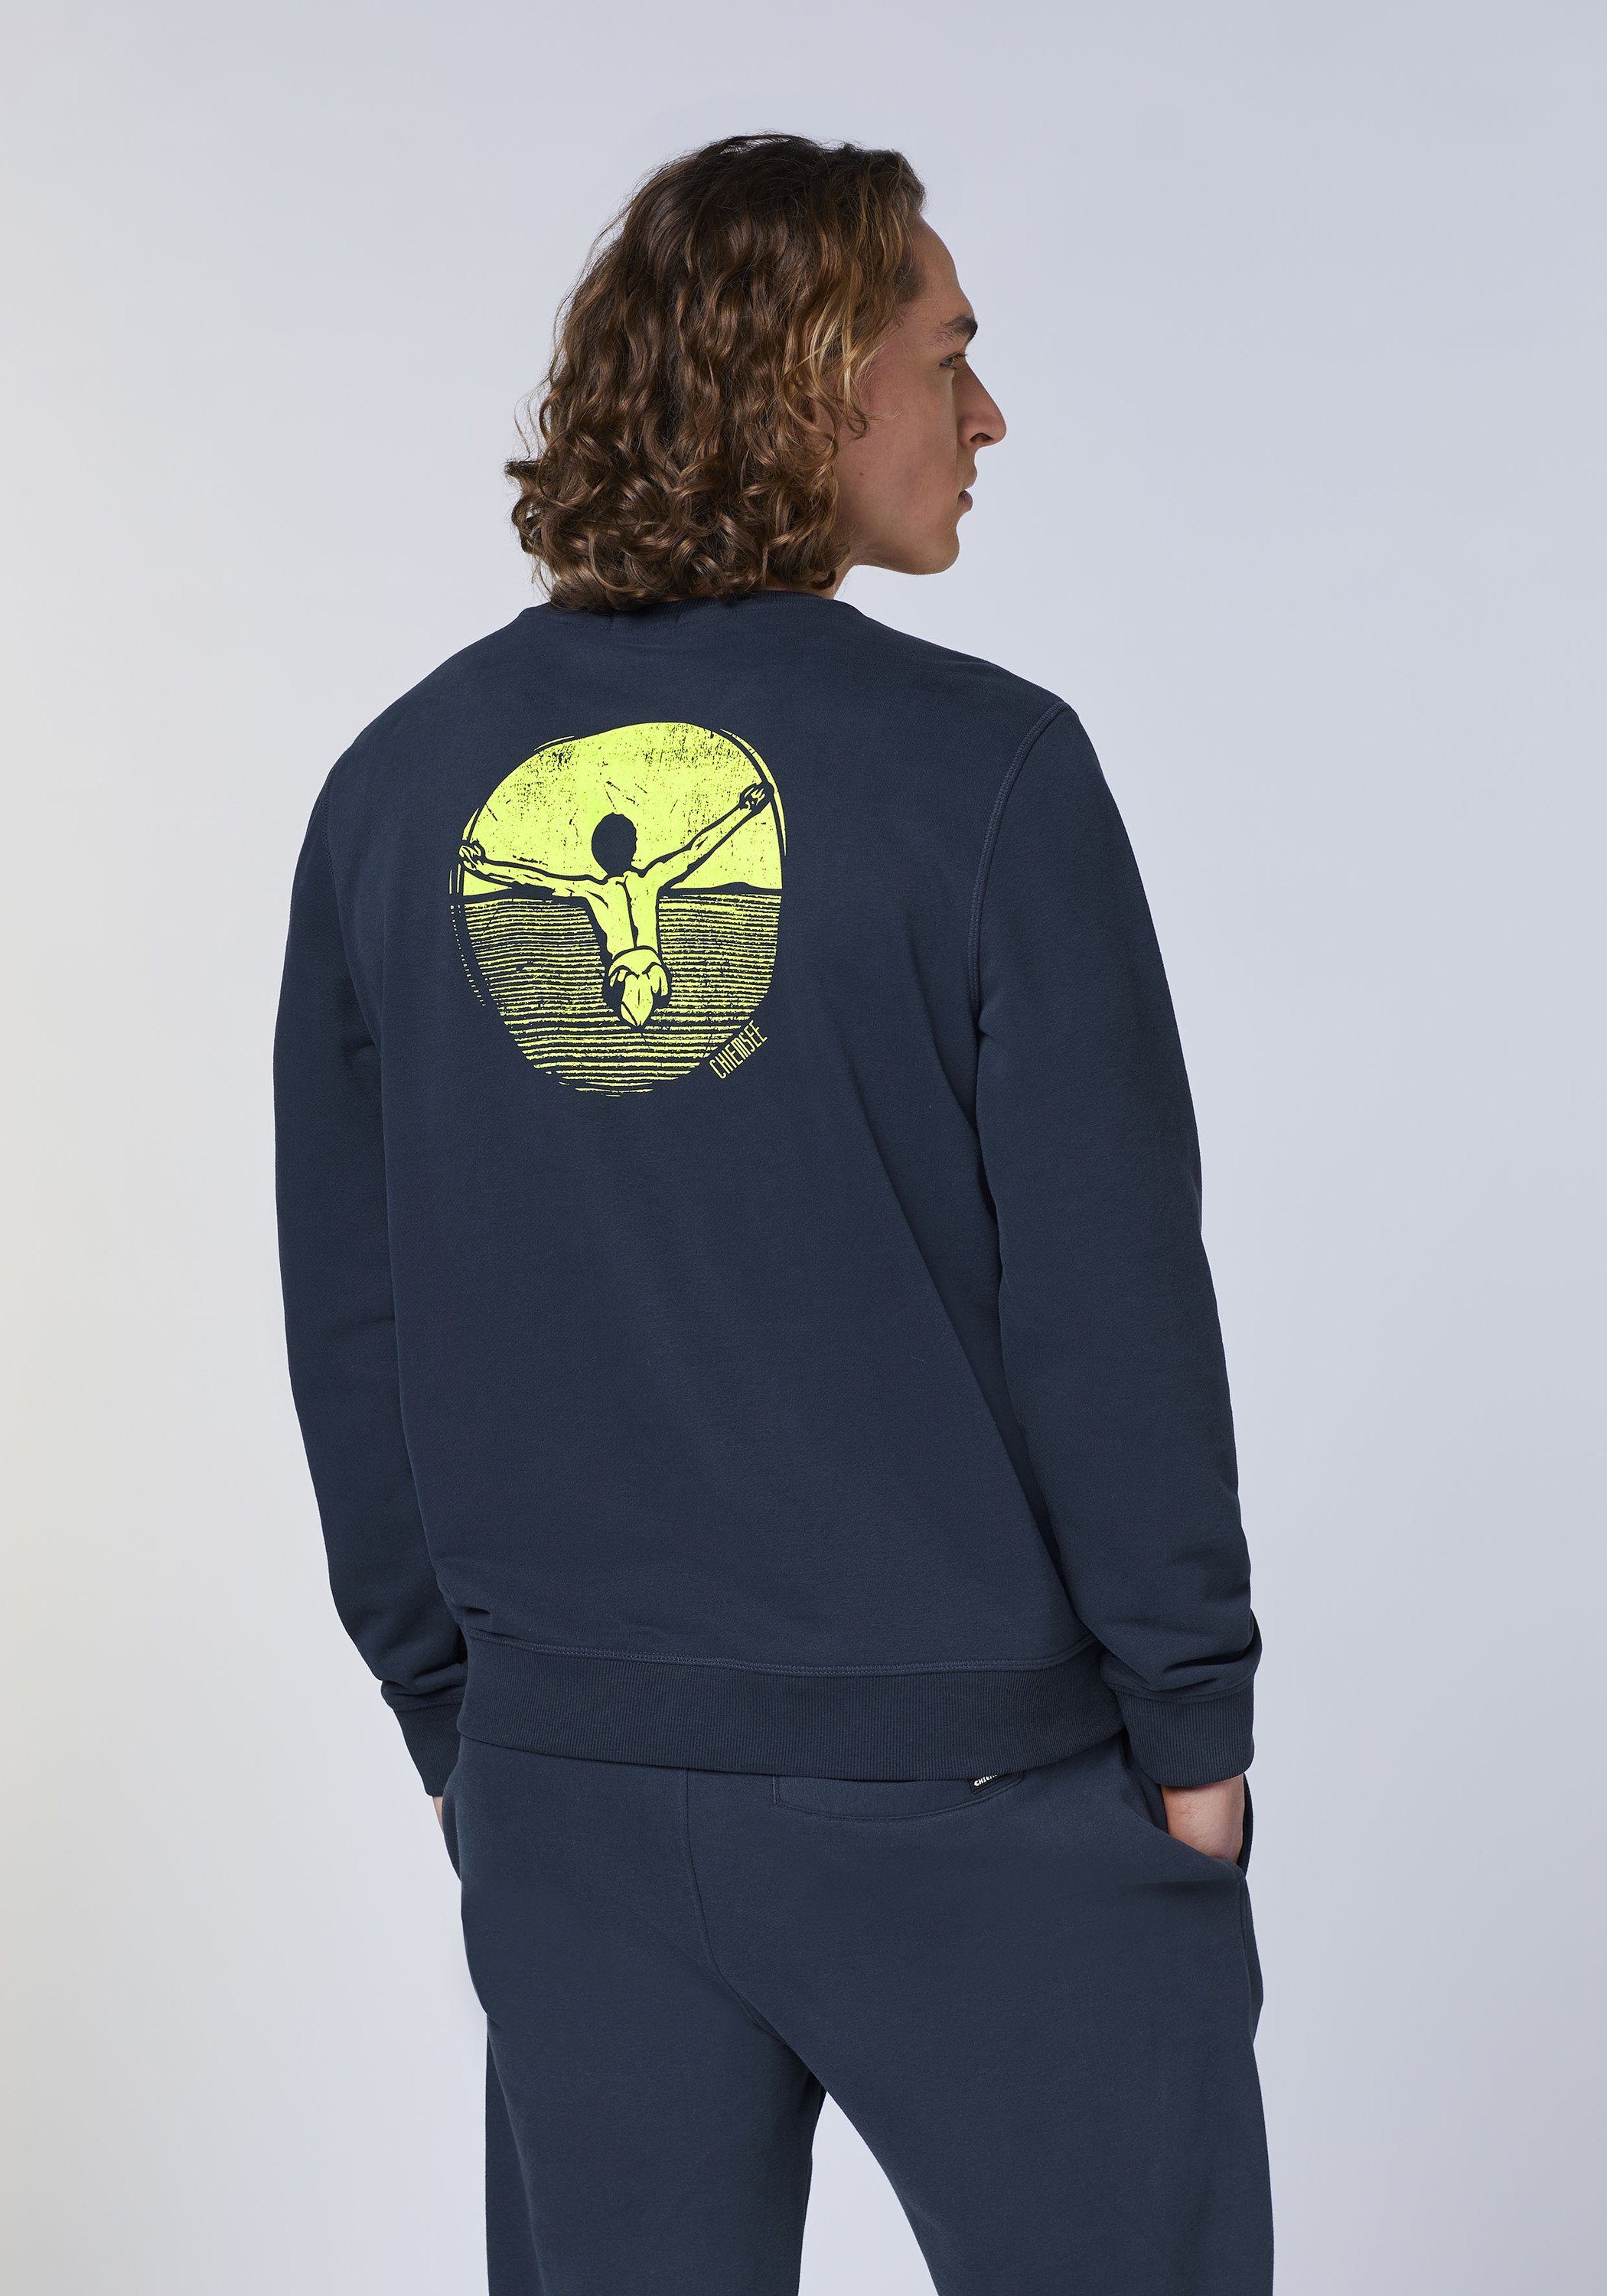 Night Sweatshirt Sweater mit Chiemsee 1 19-3924 Sky Jumper-Motiv